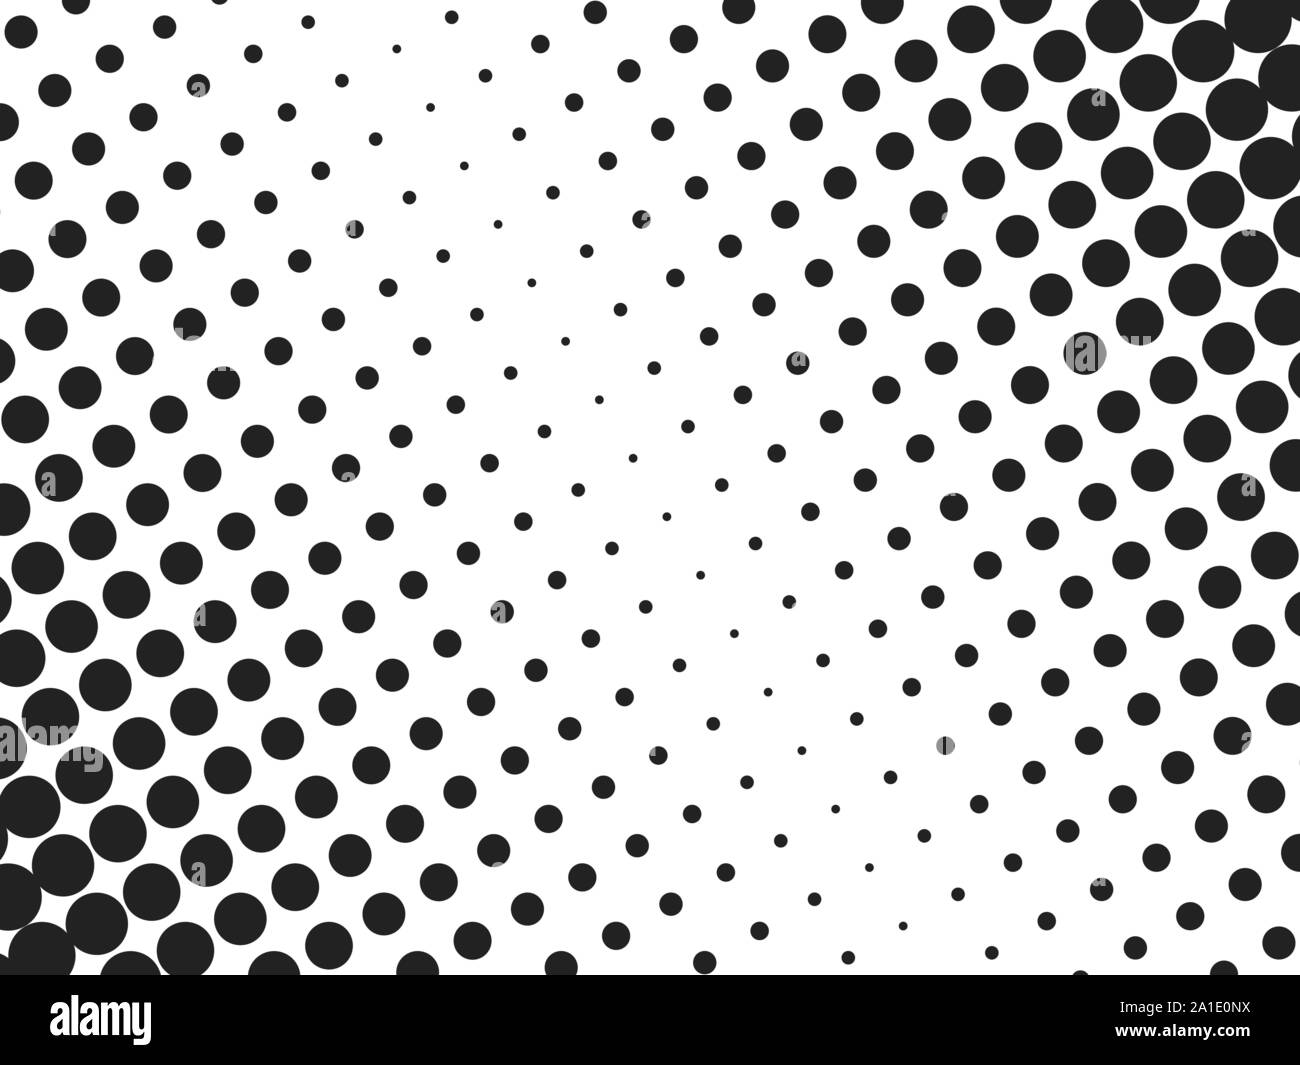 Halftone, circles, dots, transition pattern. Vector illustration. Stock Vector